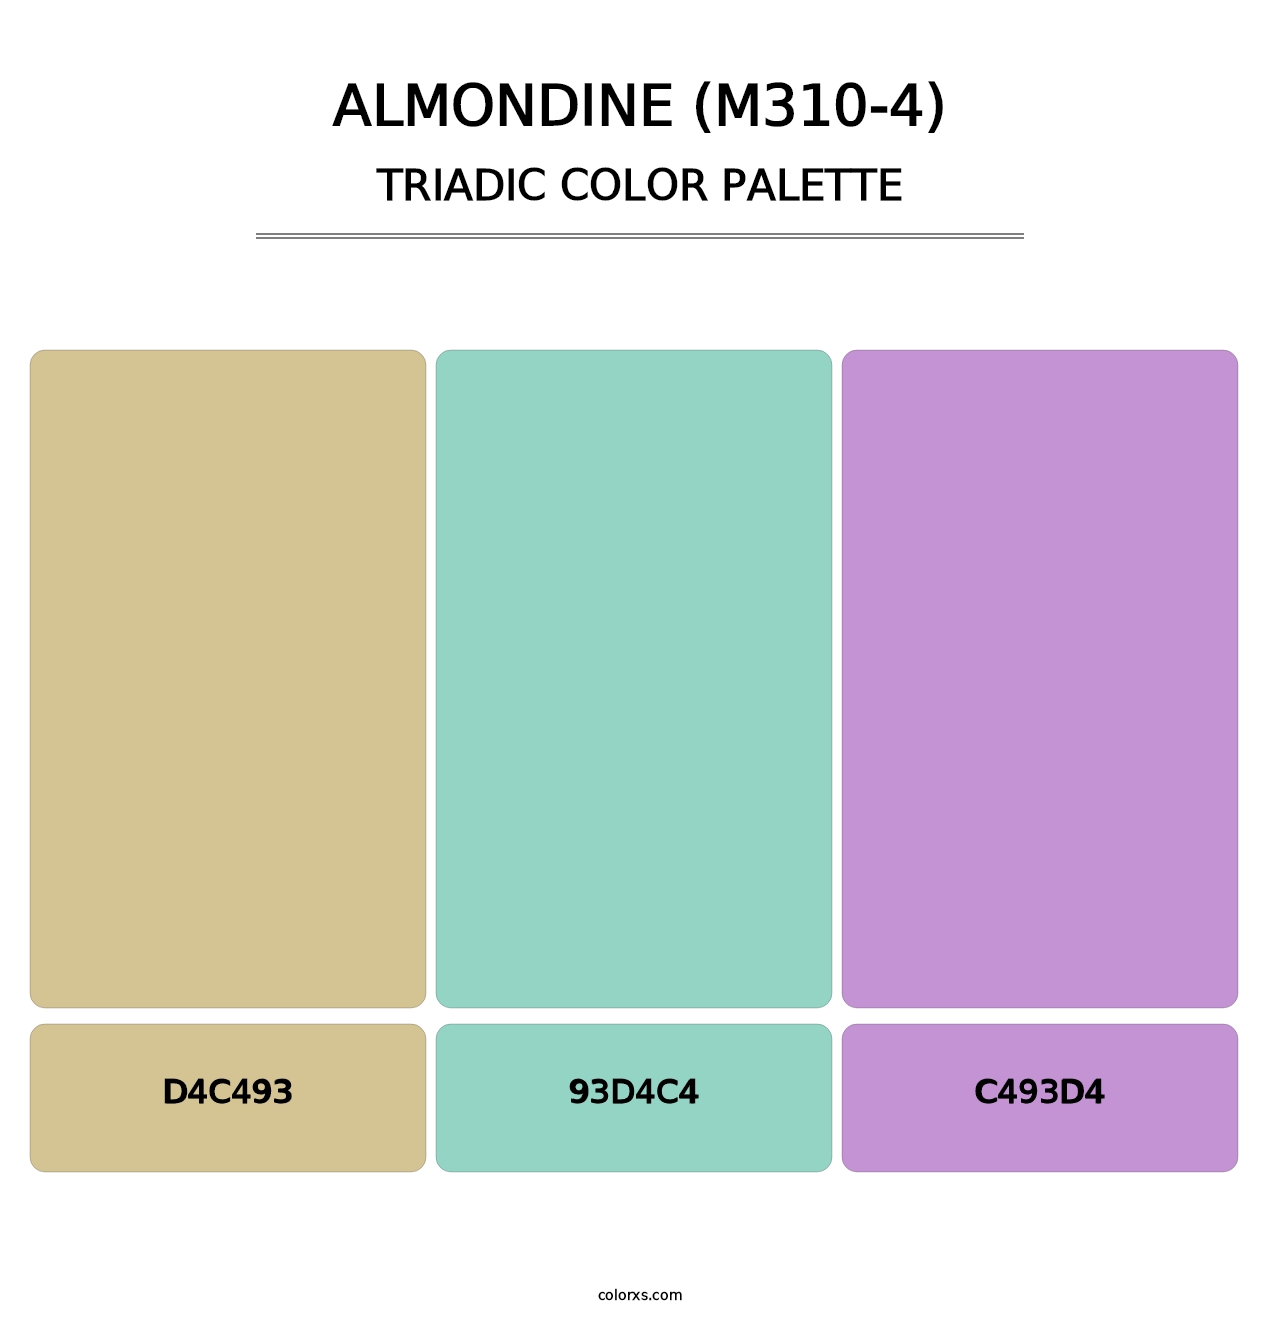 Almondine (M310-4) - Triadic Color Palette